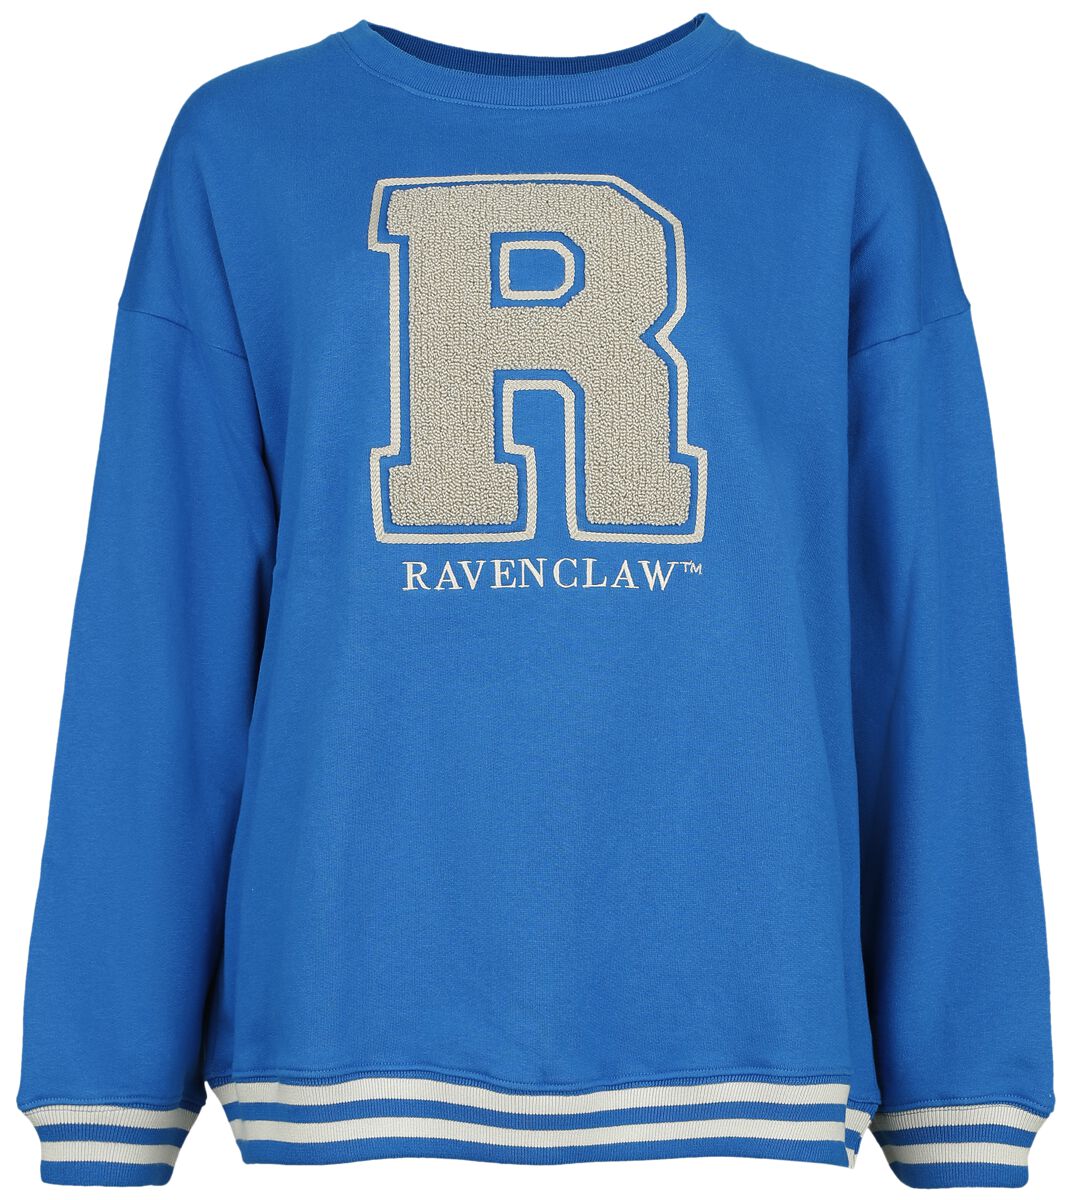 Harry Potter Ravenclaw Sweatshirt blau in XL